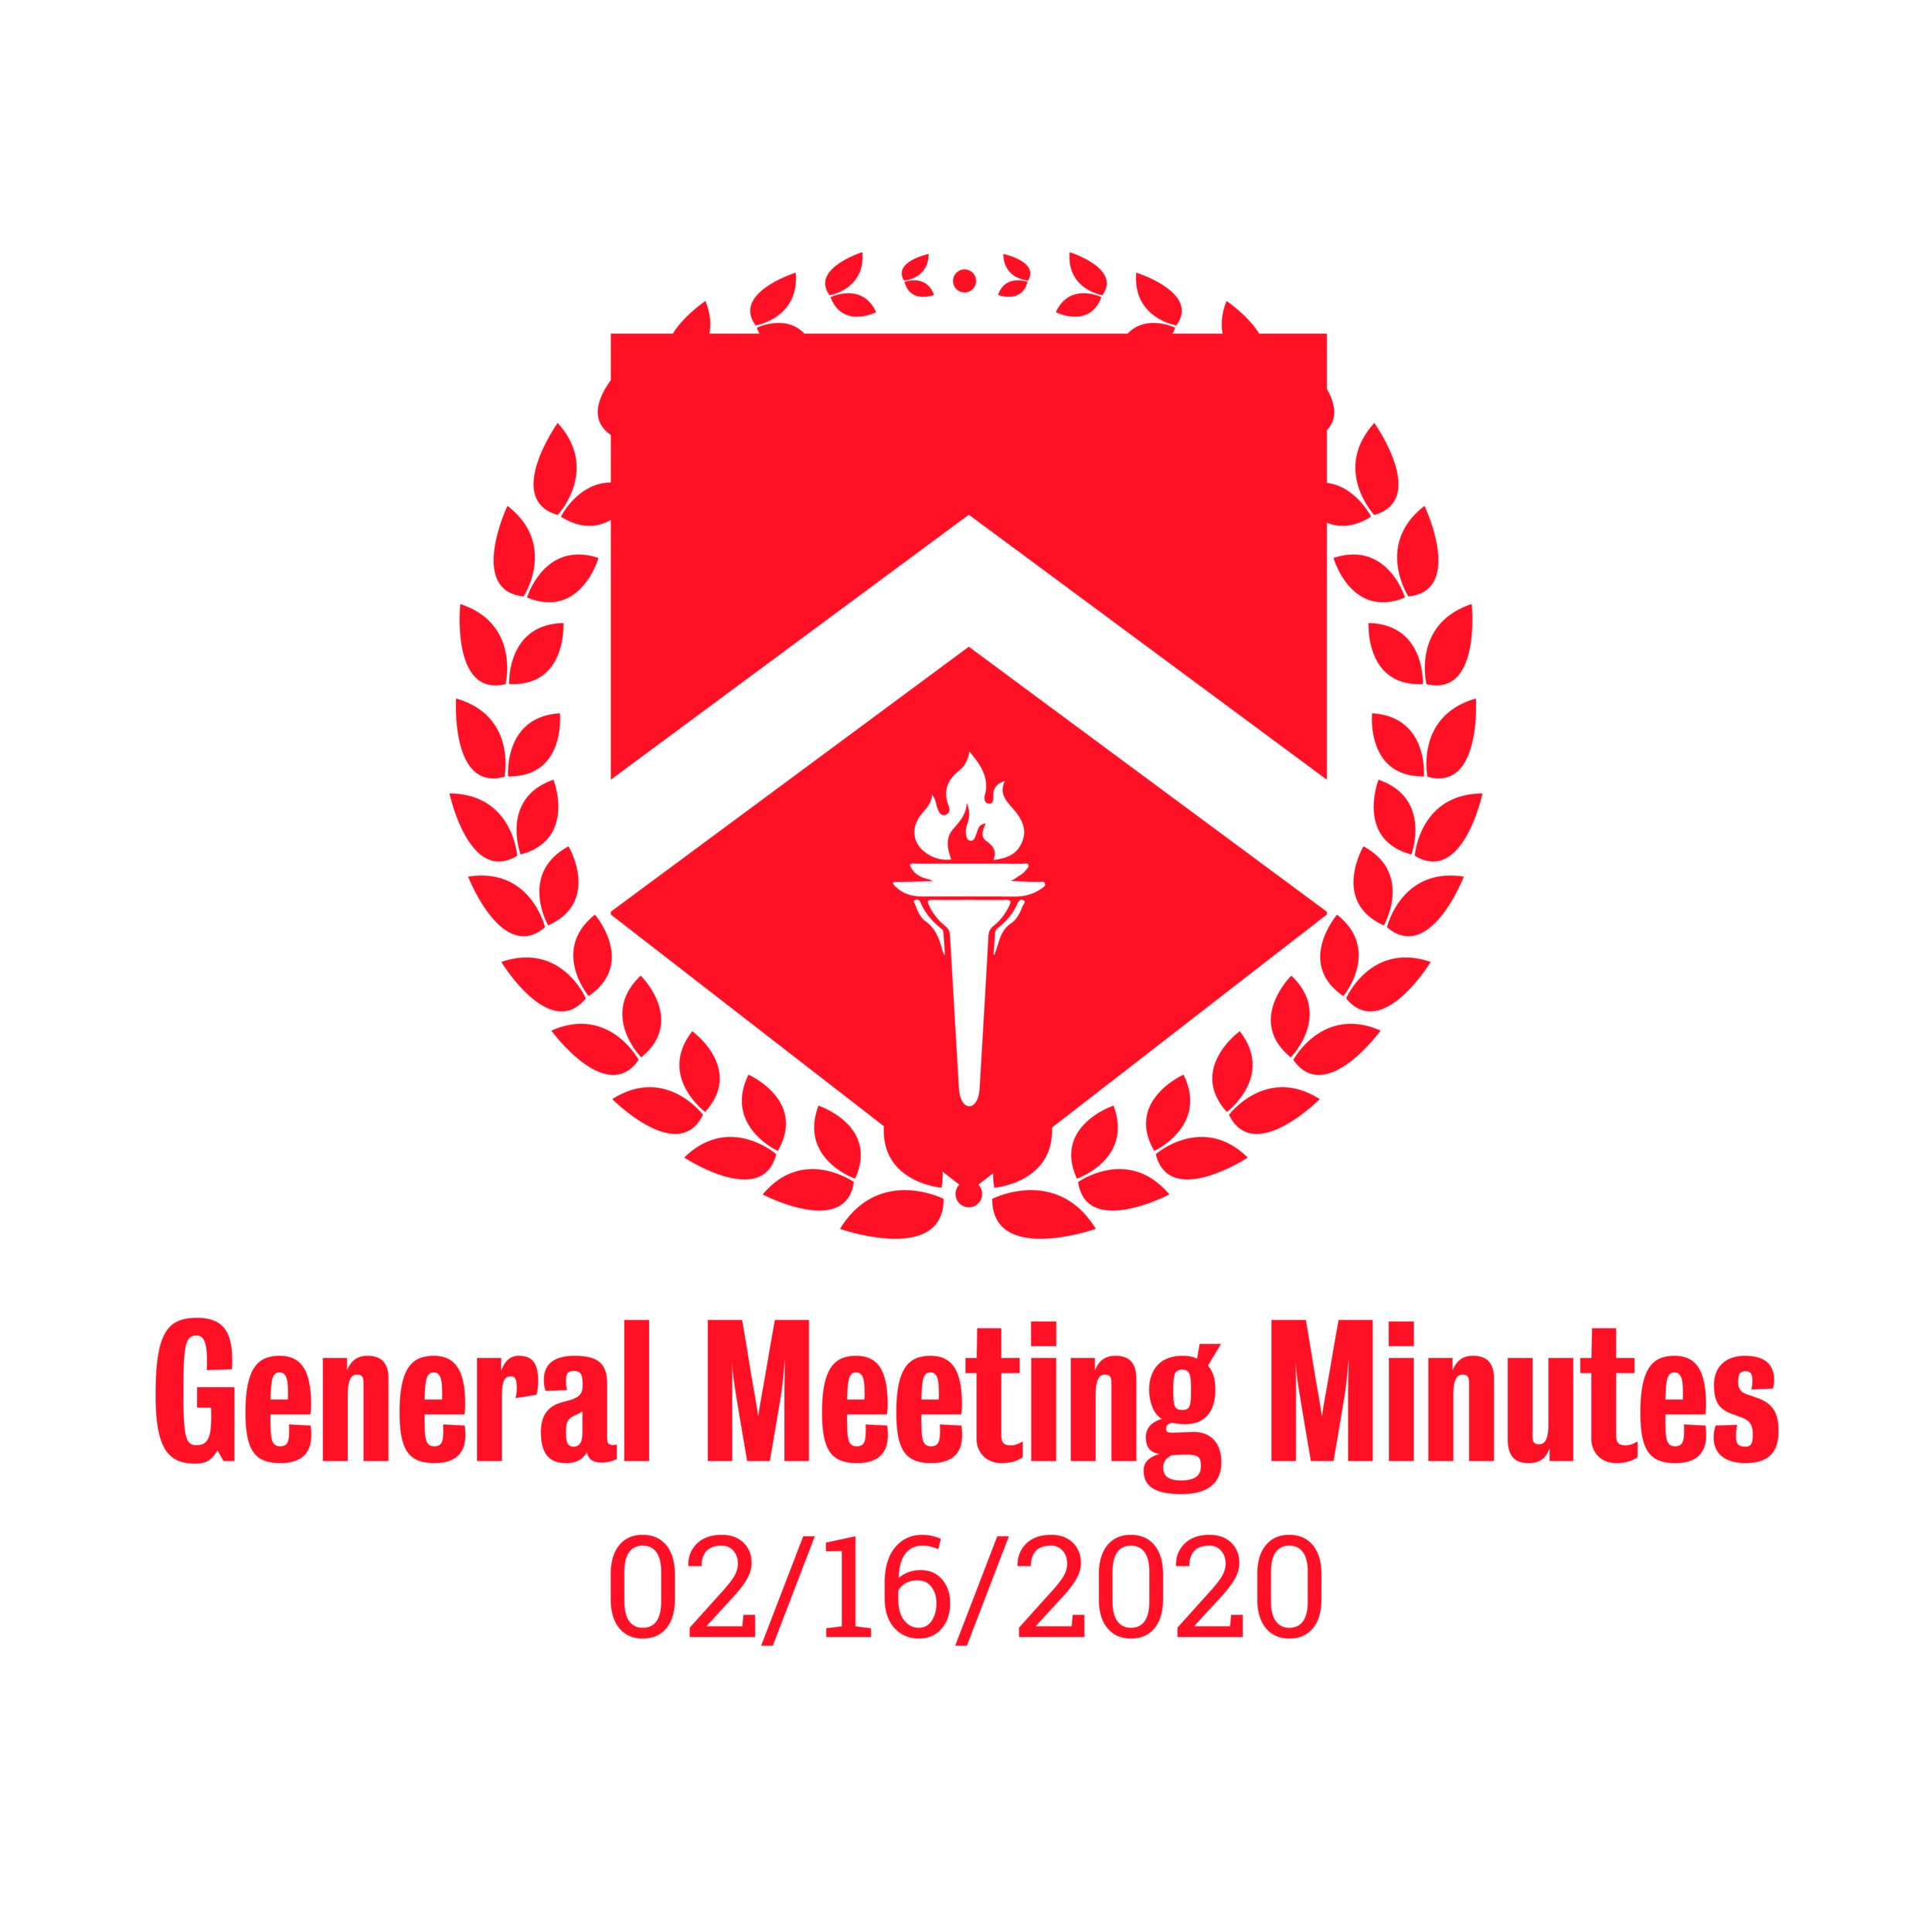 General Meeting Minutes 02/16/2020